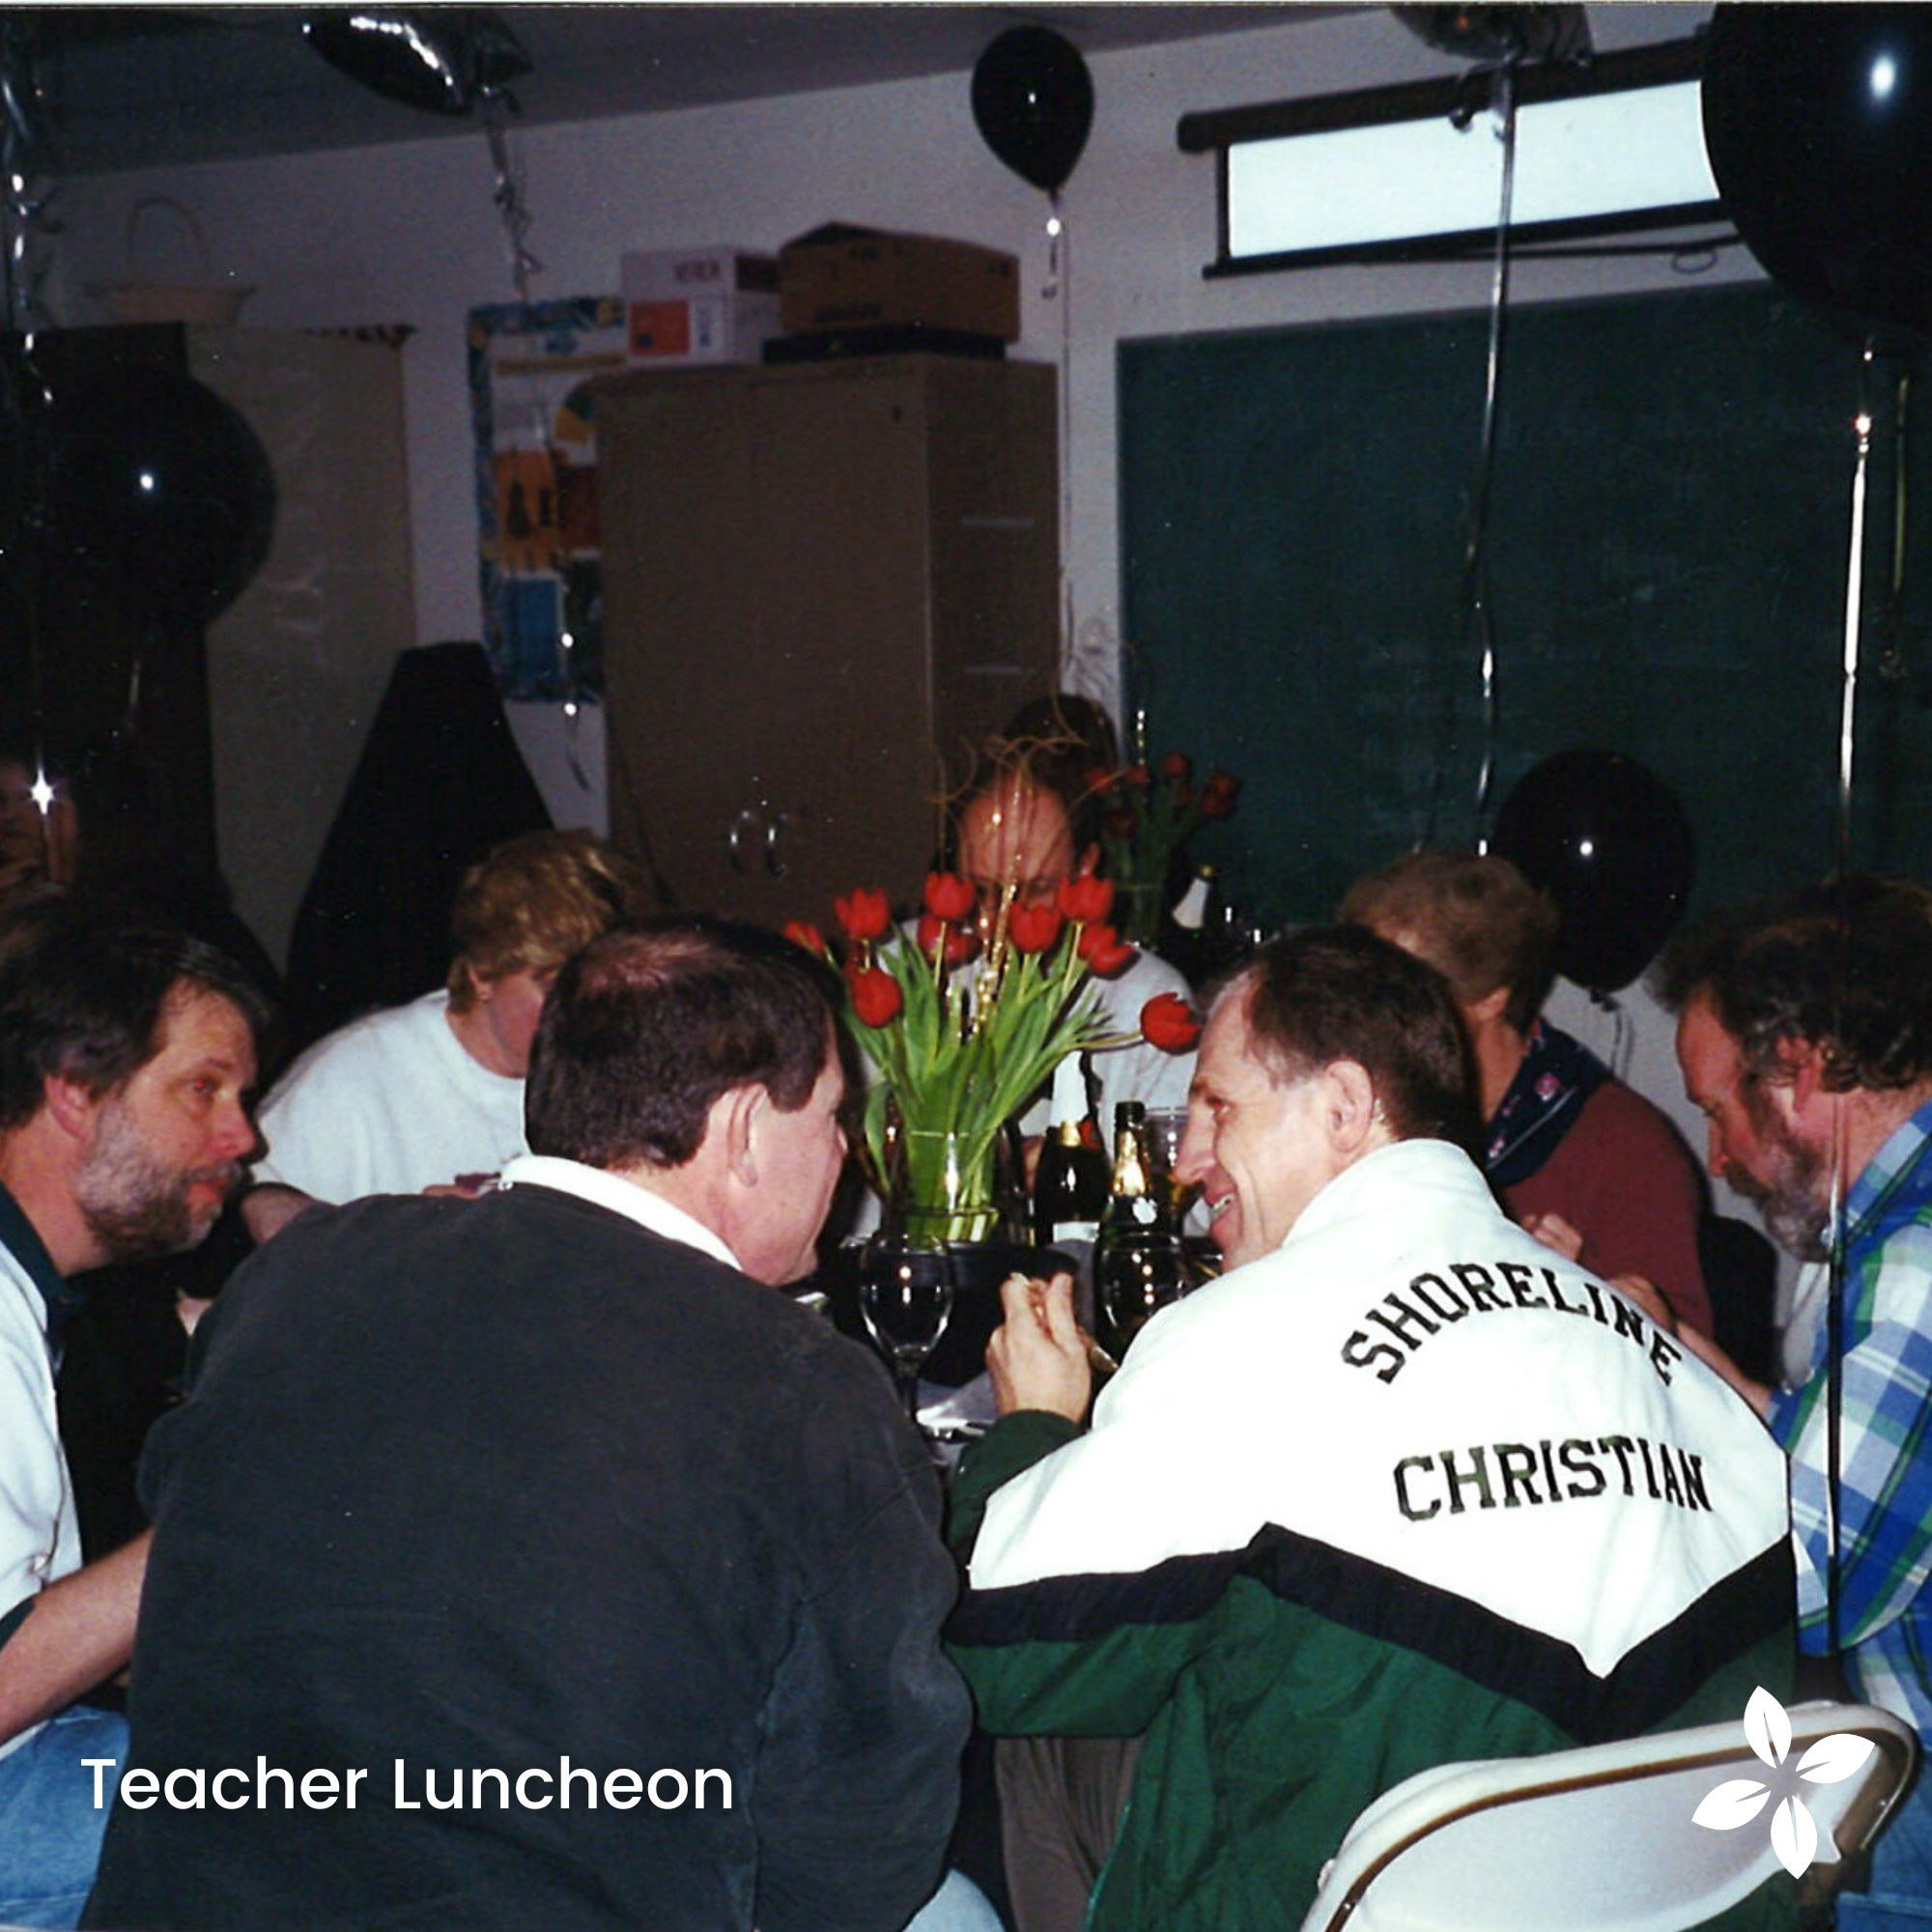 Shoreline Christian Teacher Luncheon